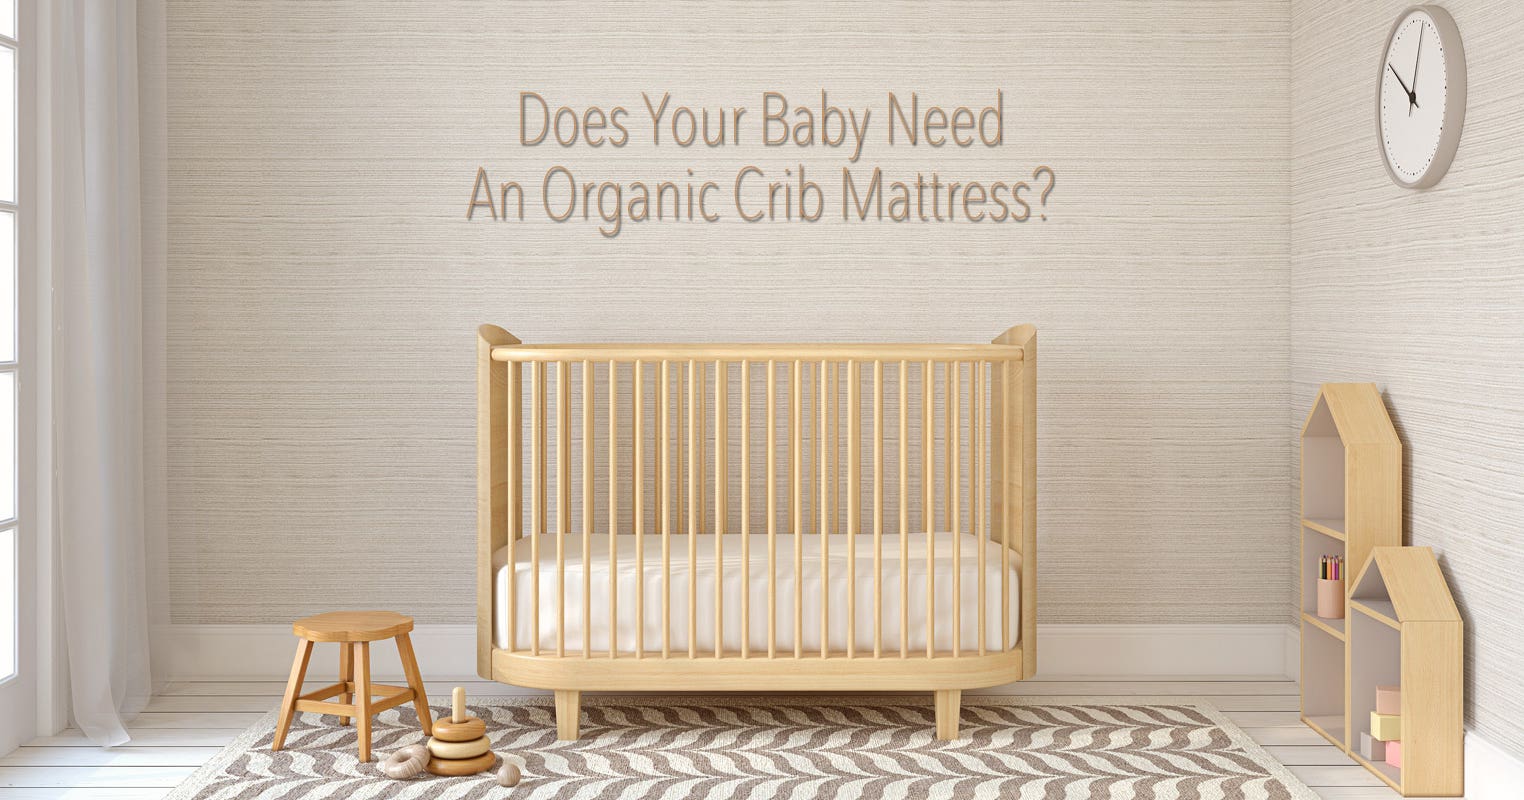 Does My Baby Need An Organic Crib Mattress?